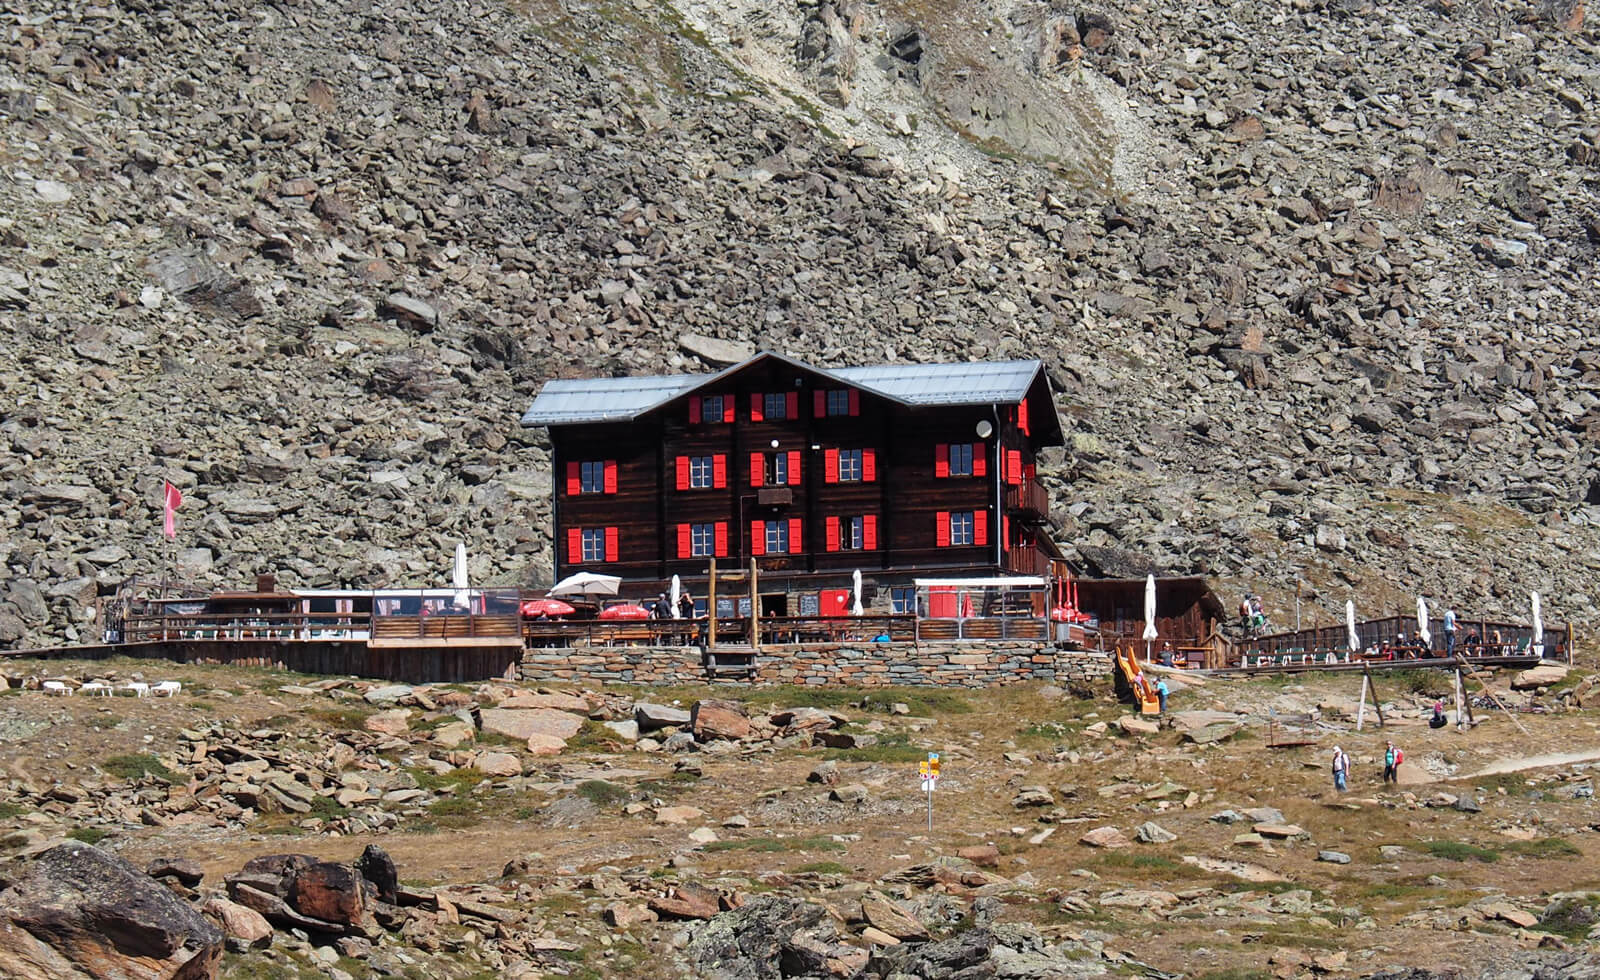 A foodie's guide to mountain restaurants in Zermatt